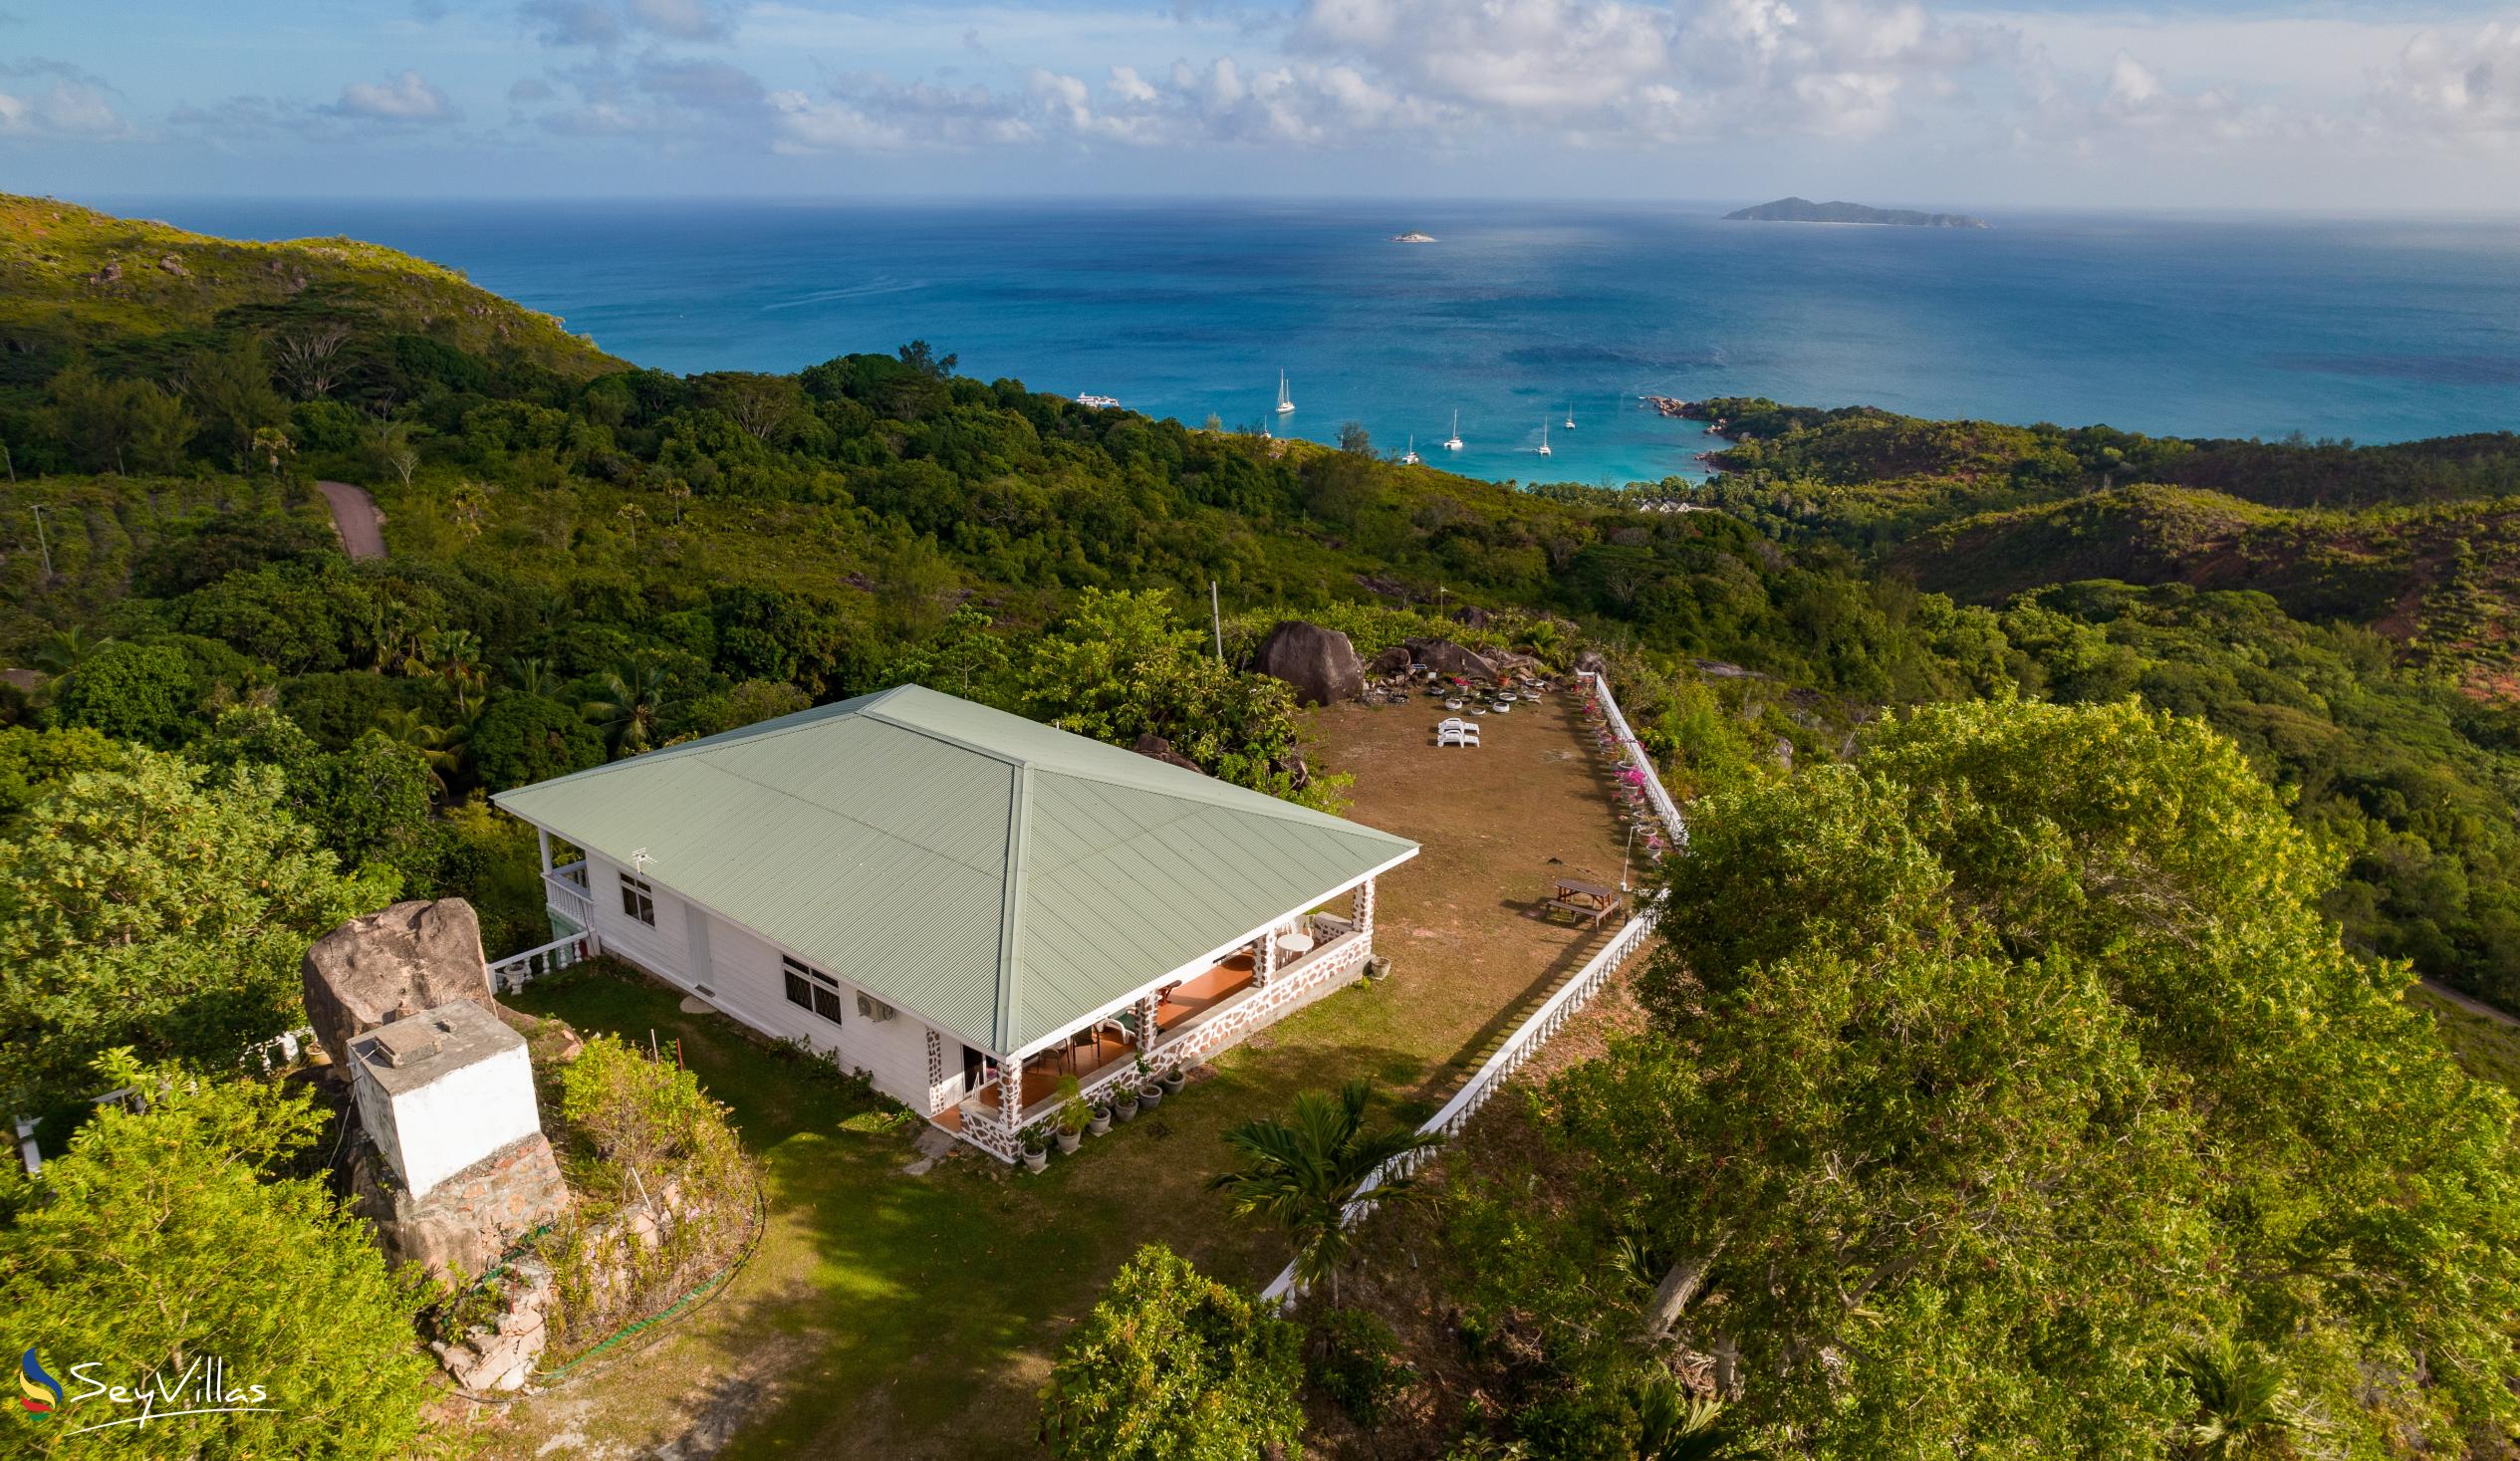 Photo 1: Maison du Soleil - Outdoor area - Praslin (Seychelles)